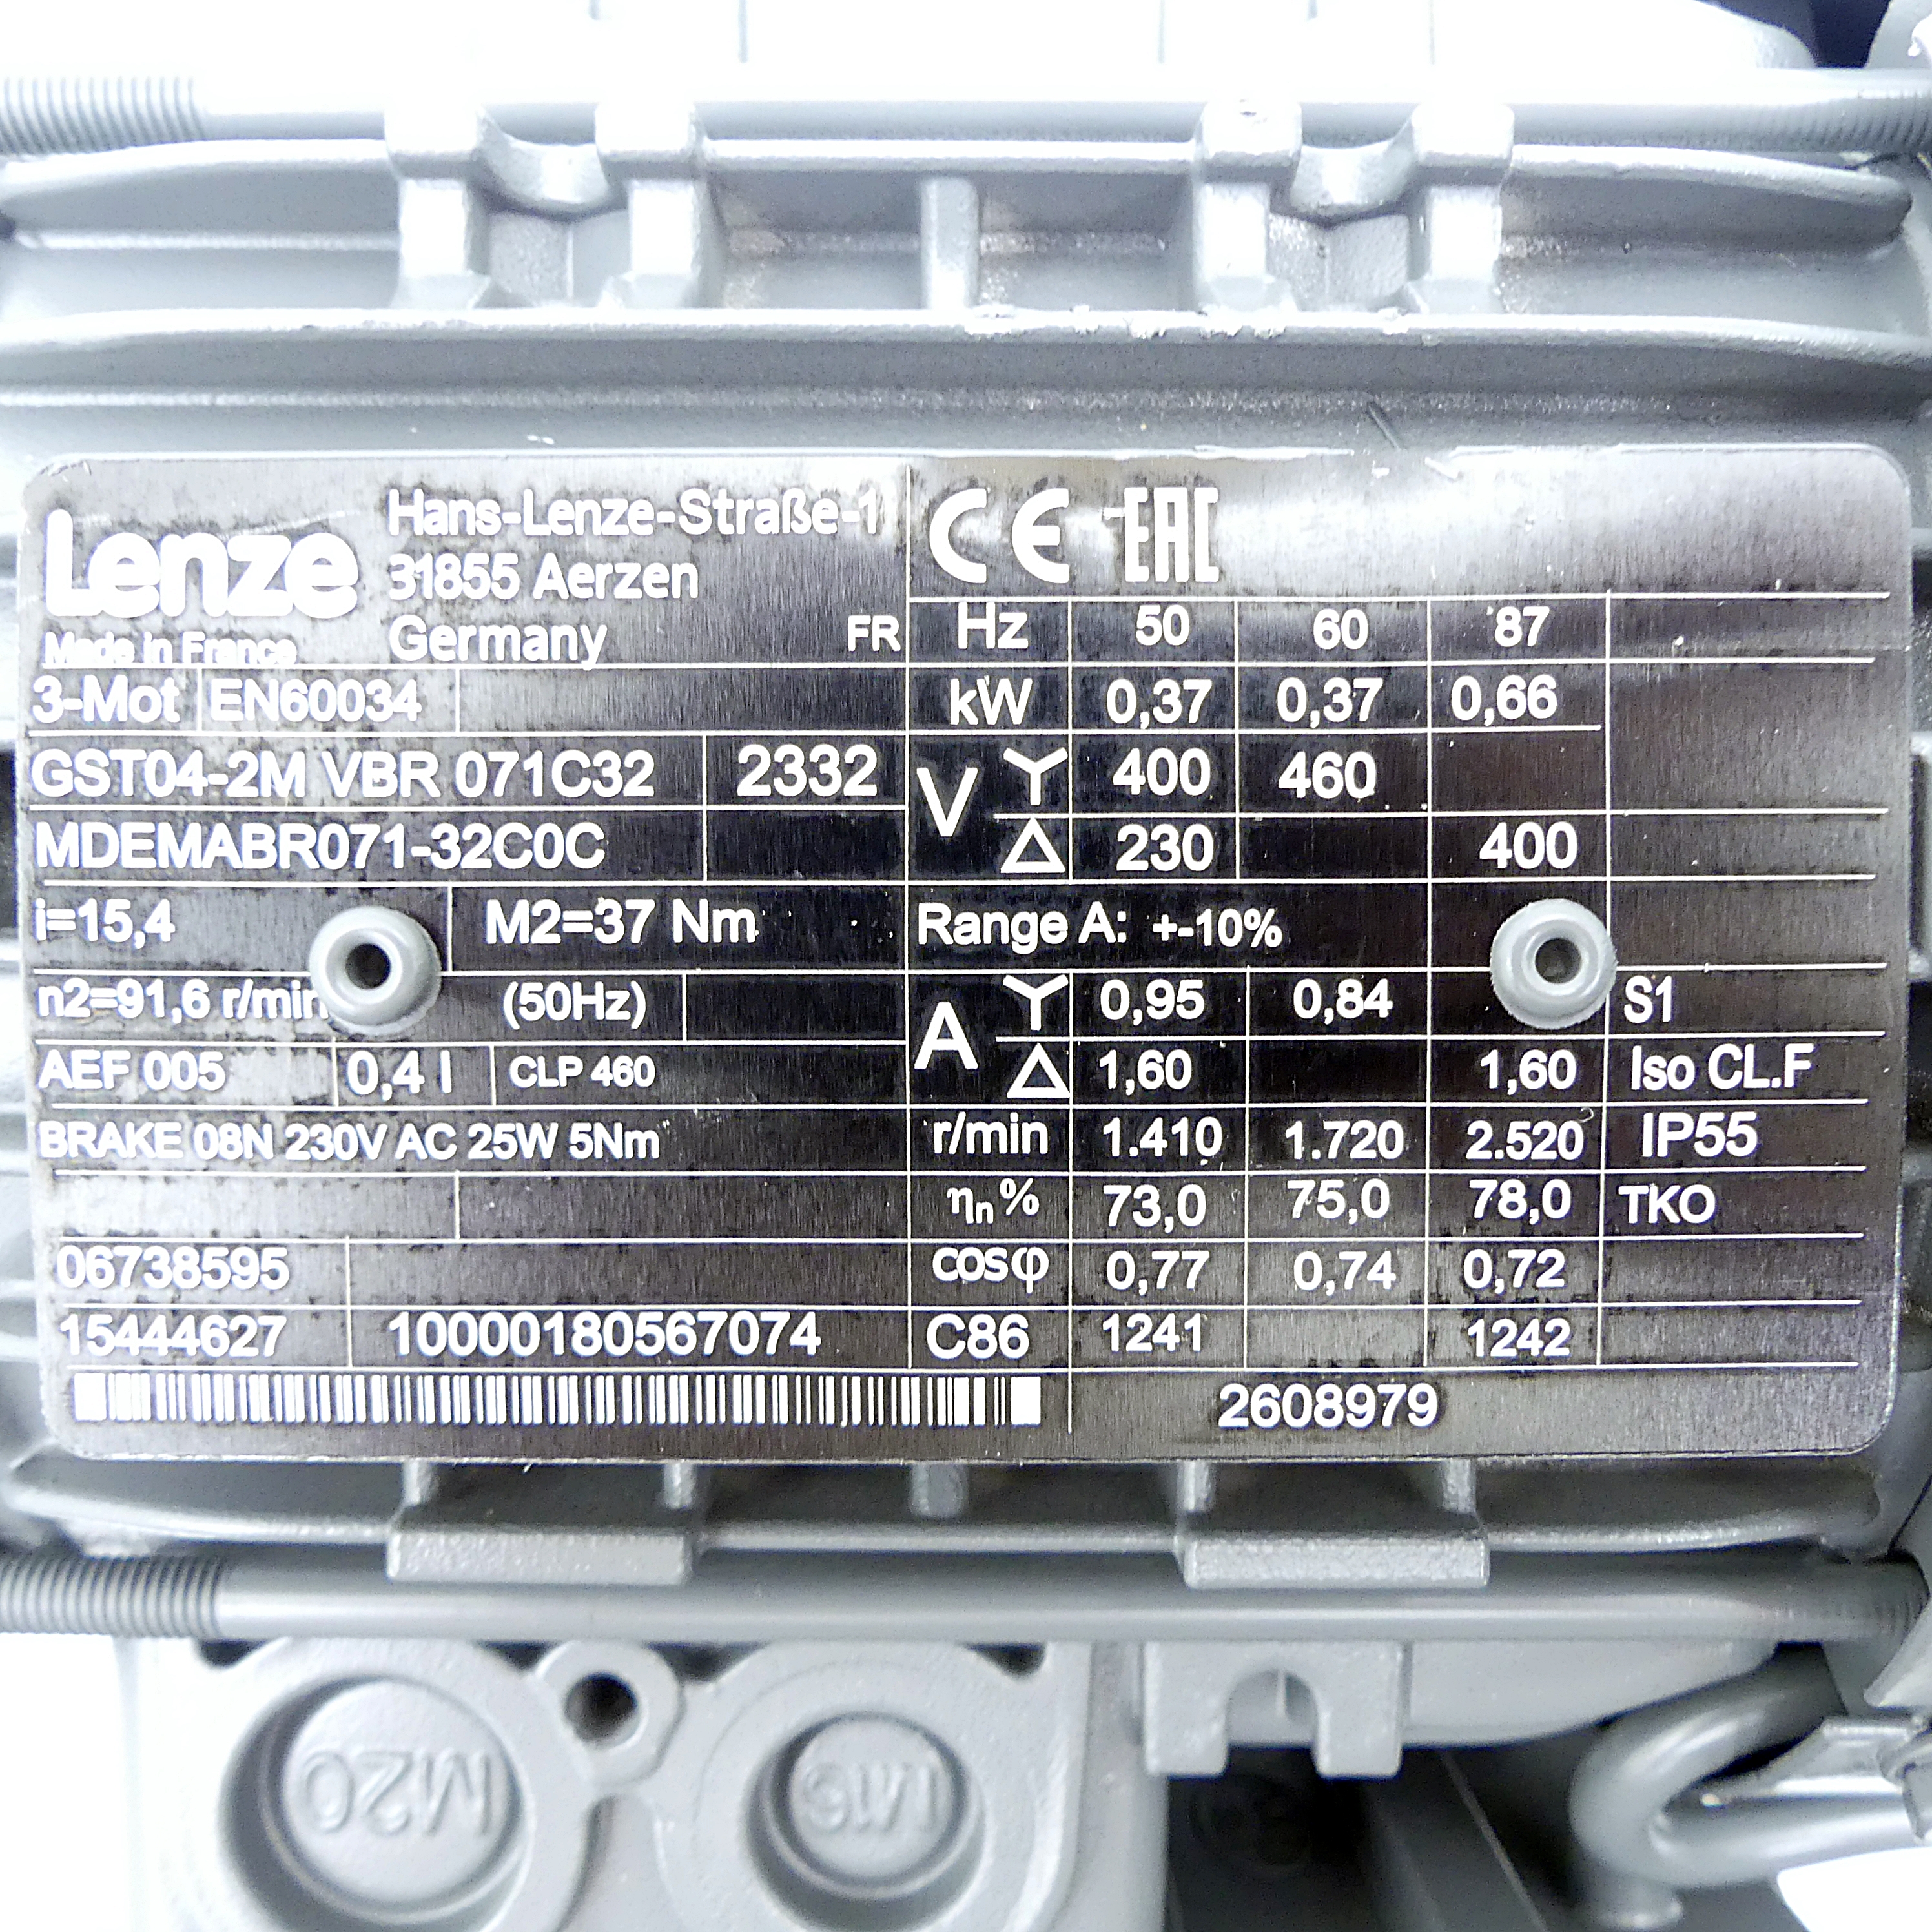 Getriebemotor GST04-2M VBR 071C32 